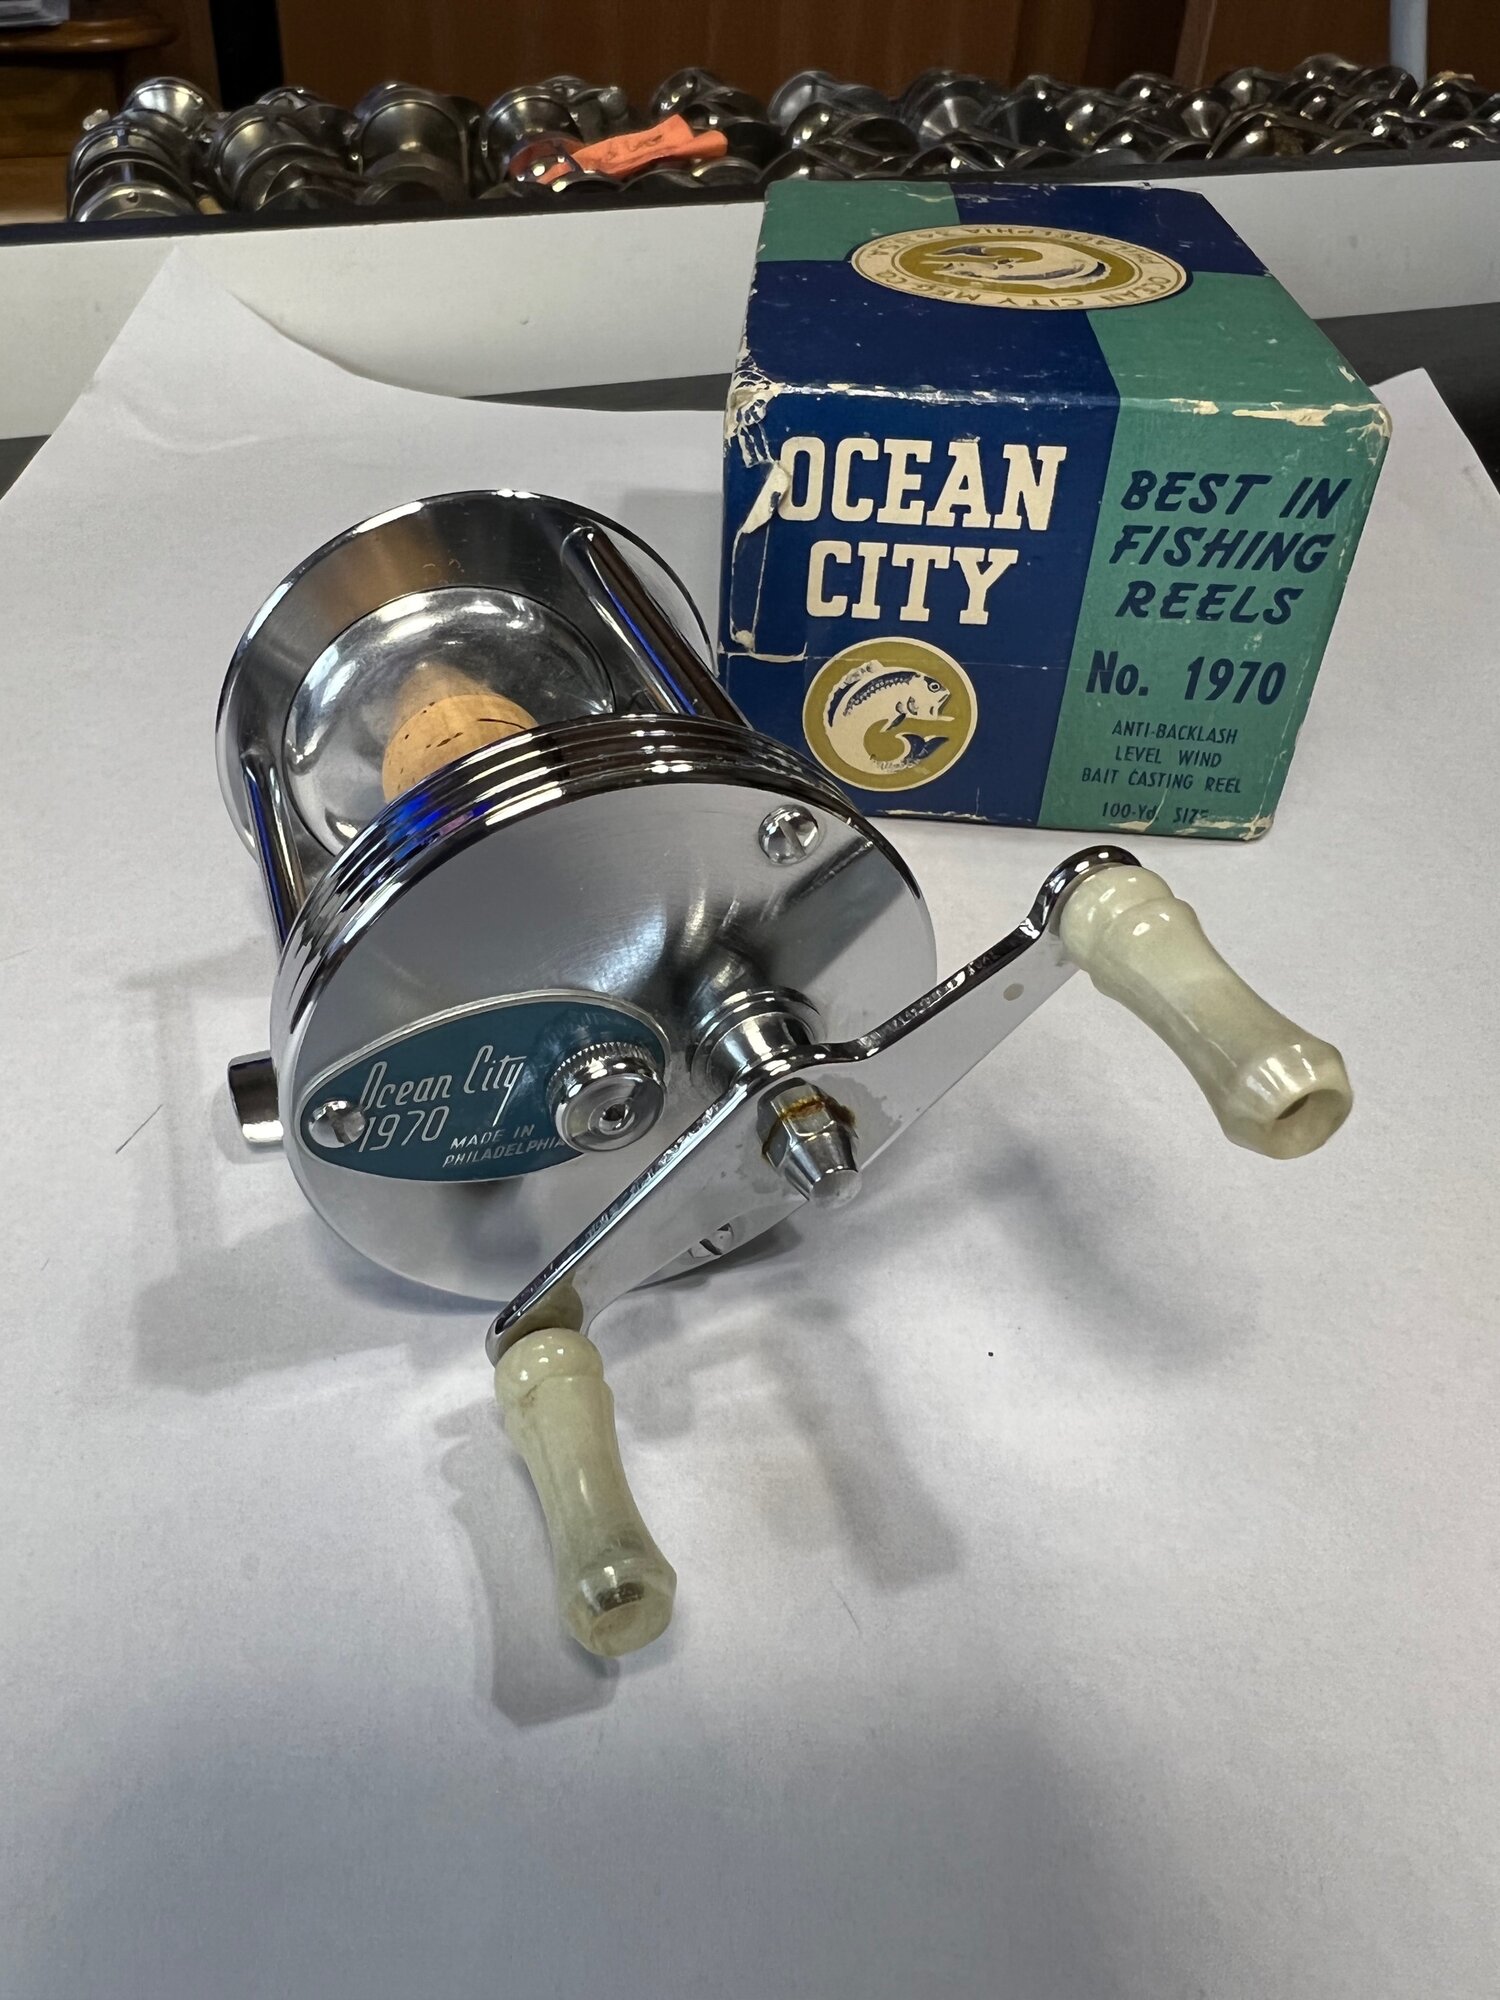 Vintage 1581 Ocean City Level Wind Bait Casting Fishing Reel w/ Box & Manual